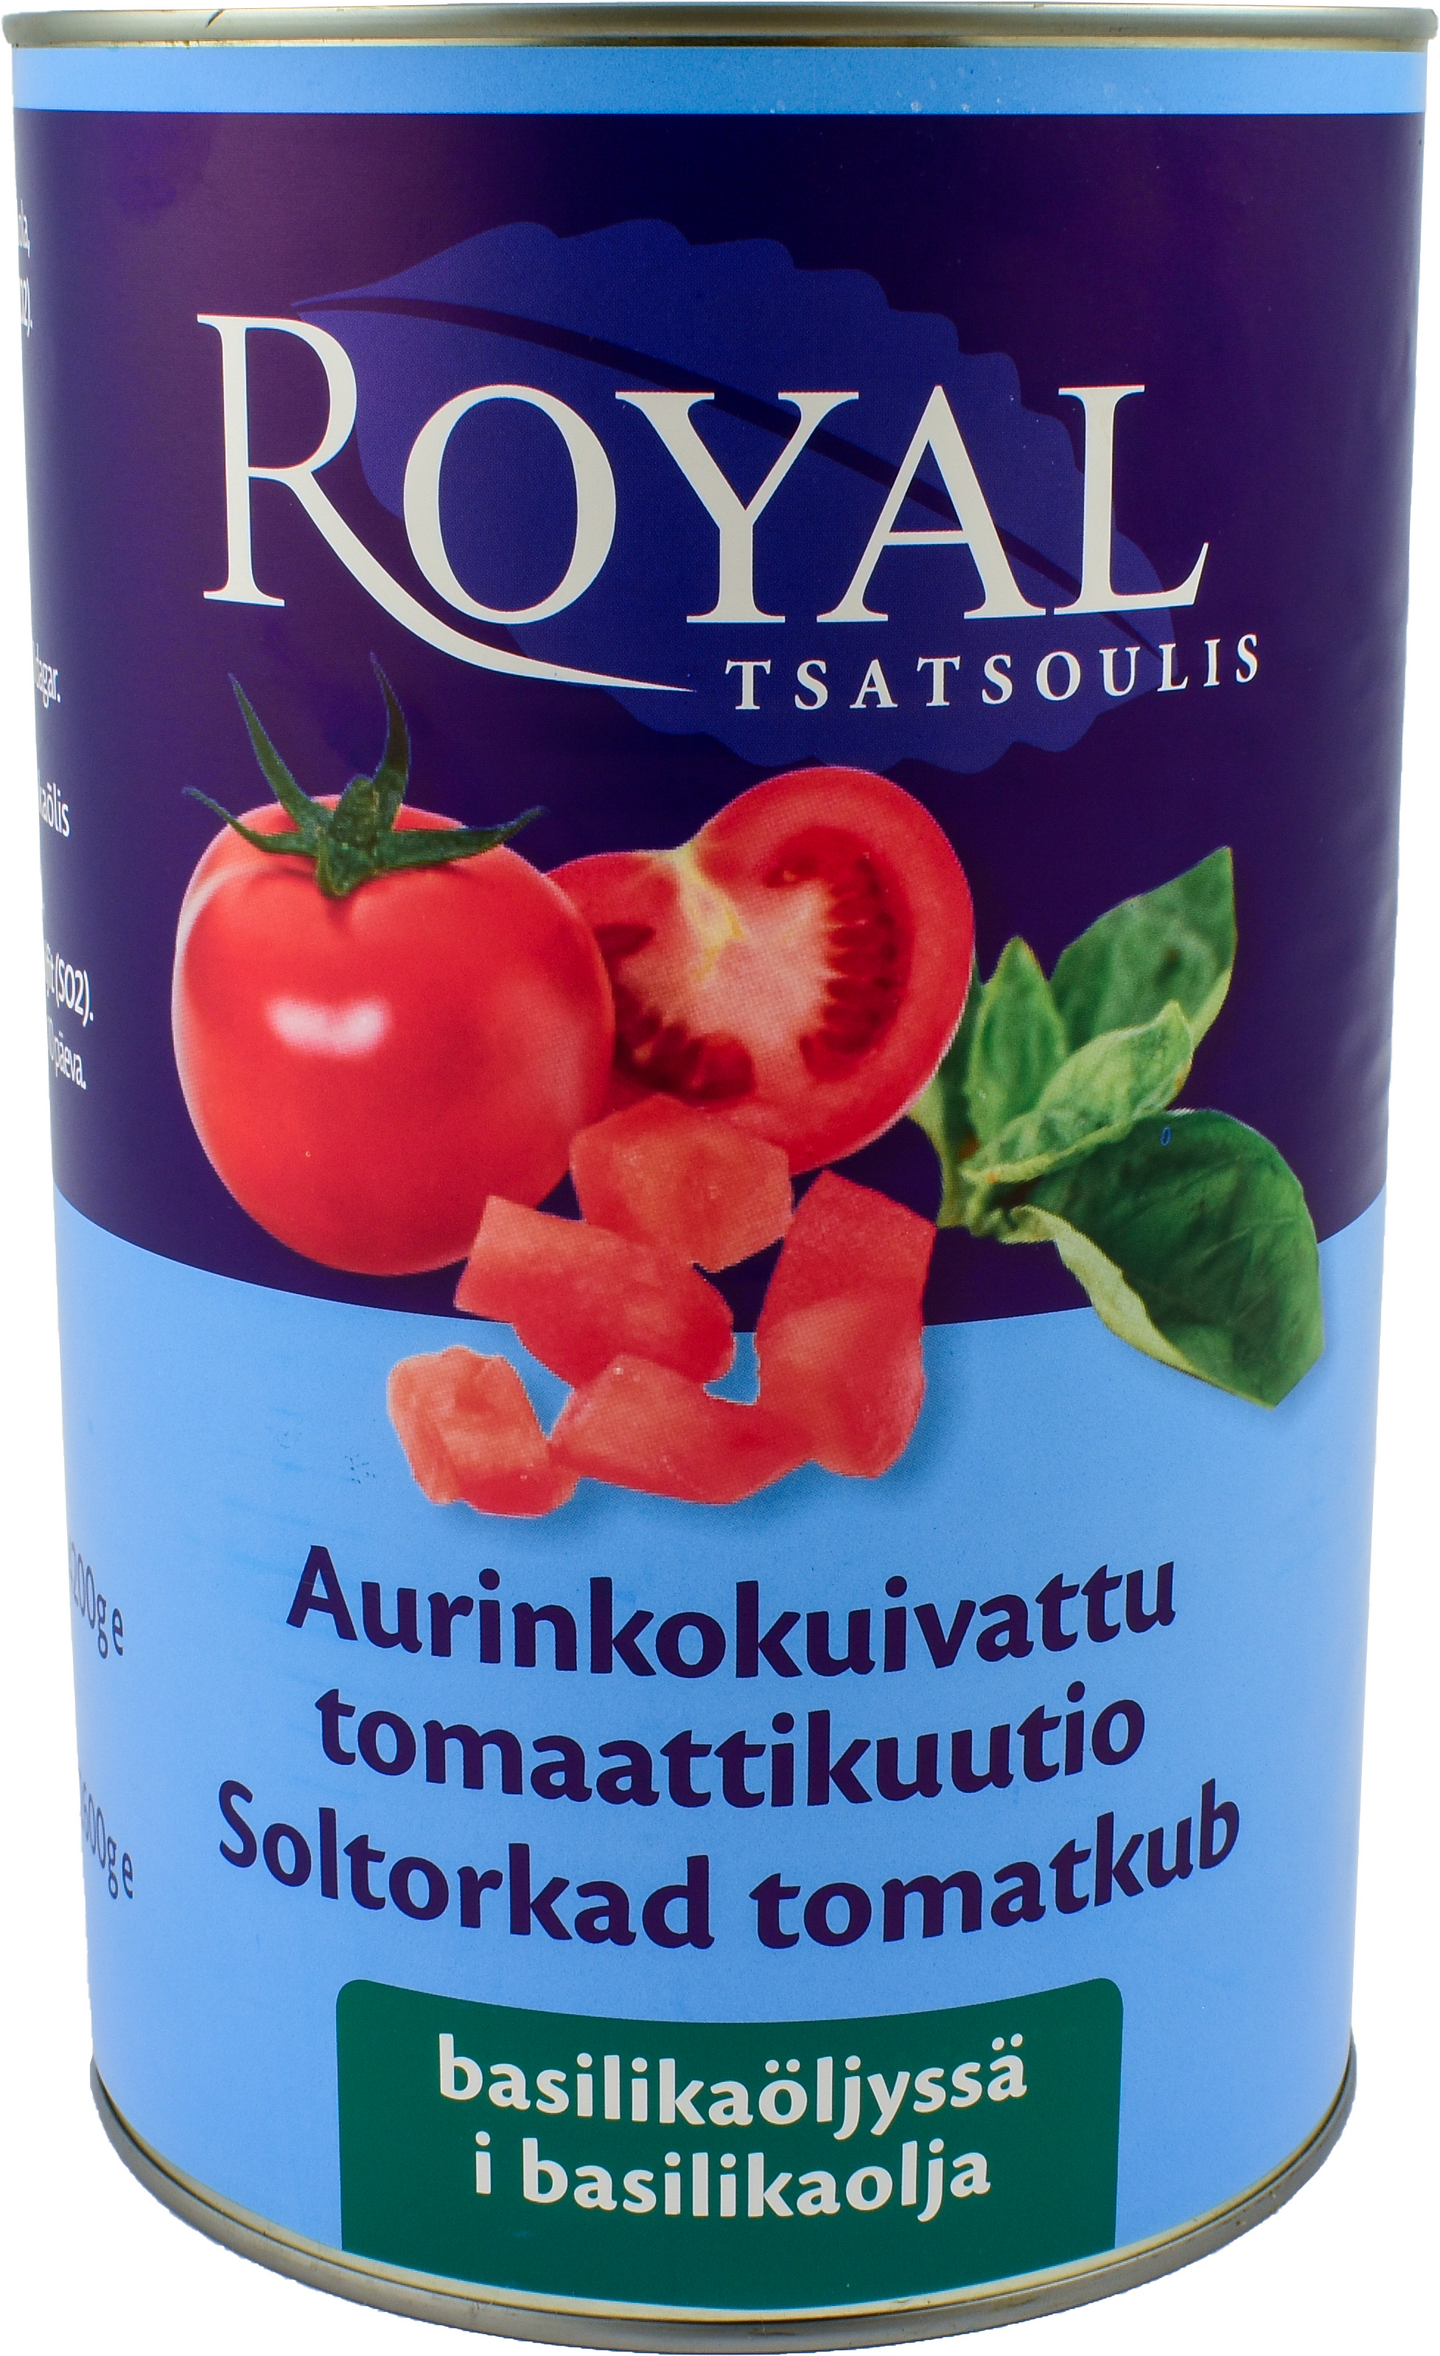 Royal aurinkokuivattu tomaattikuutio basilikaöljyssä 4,2/2,6 kg